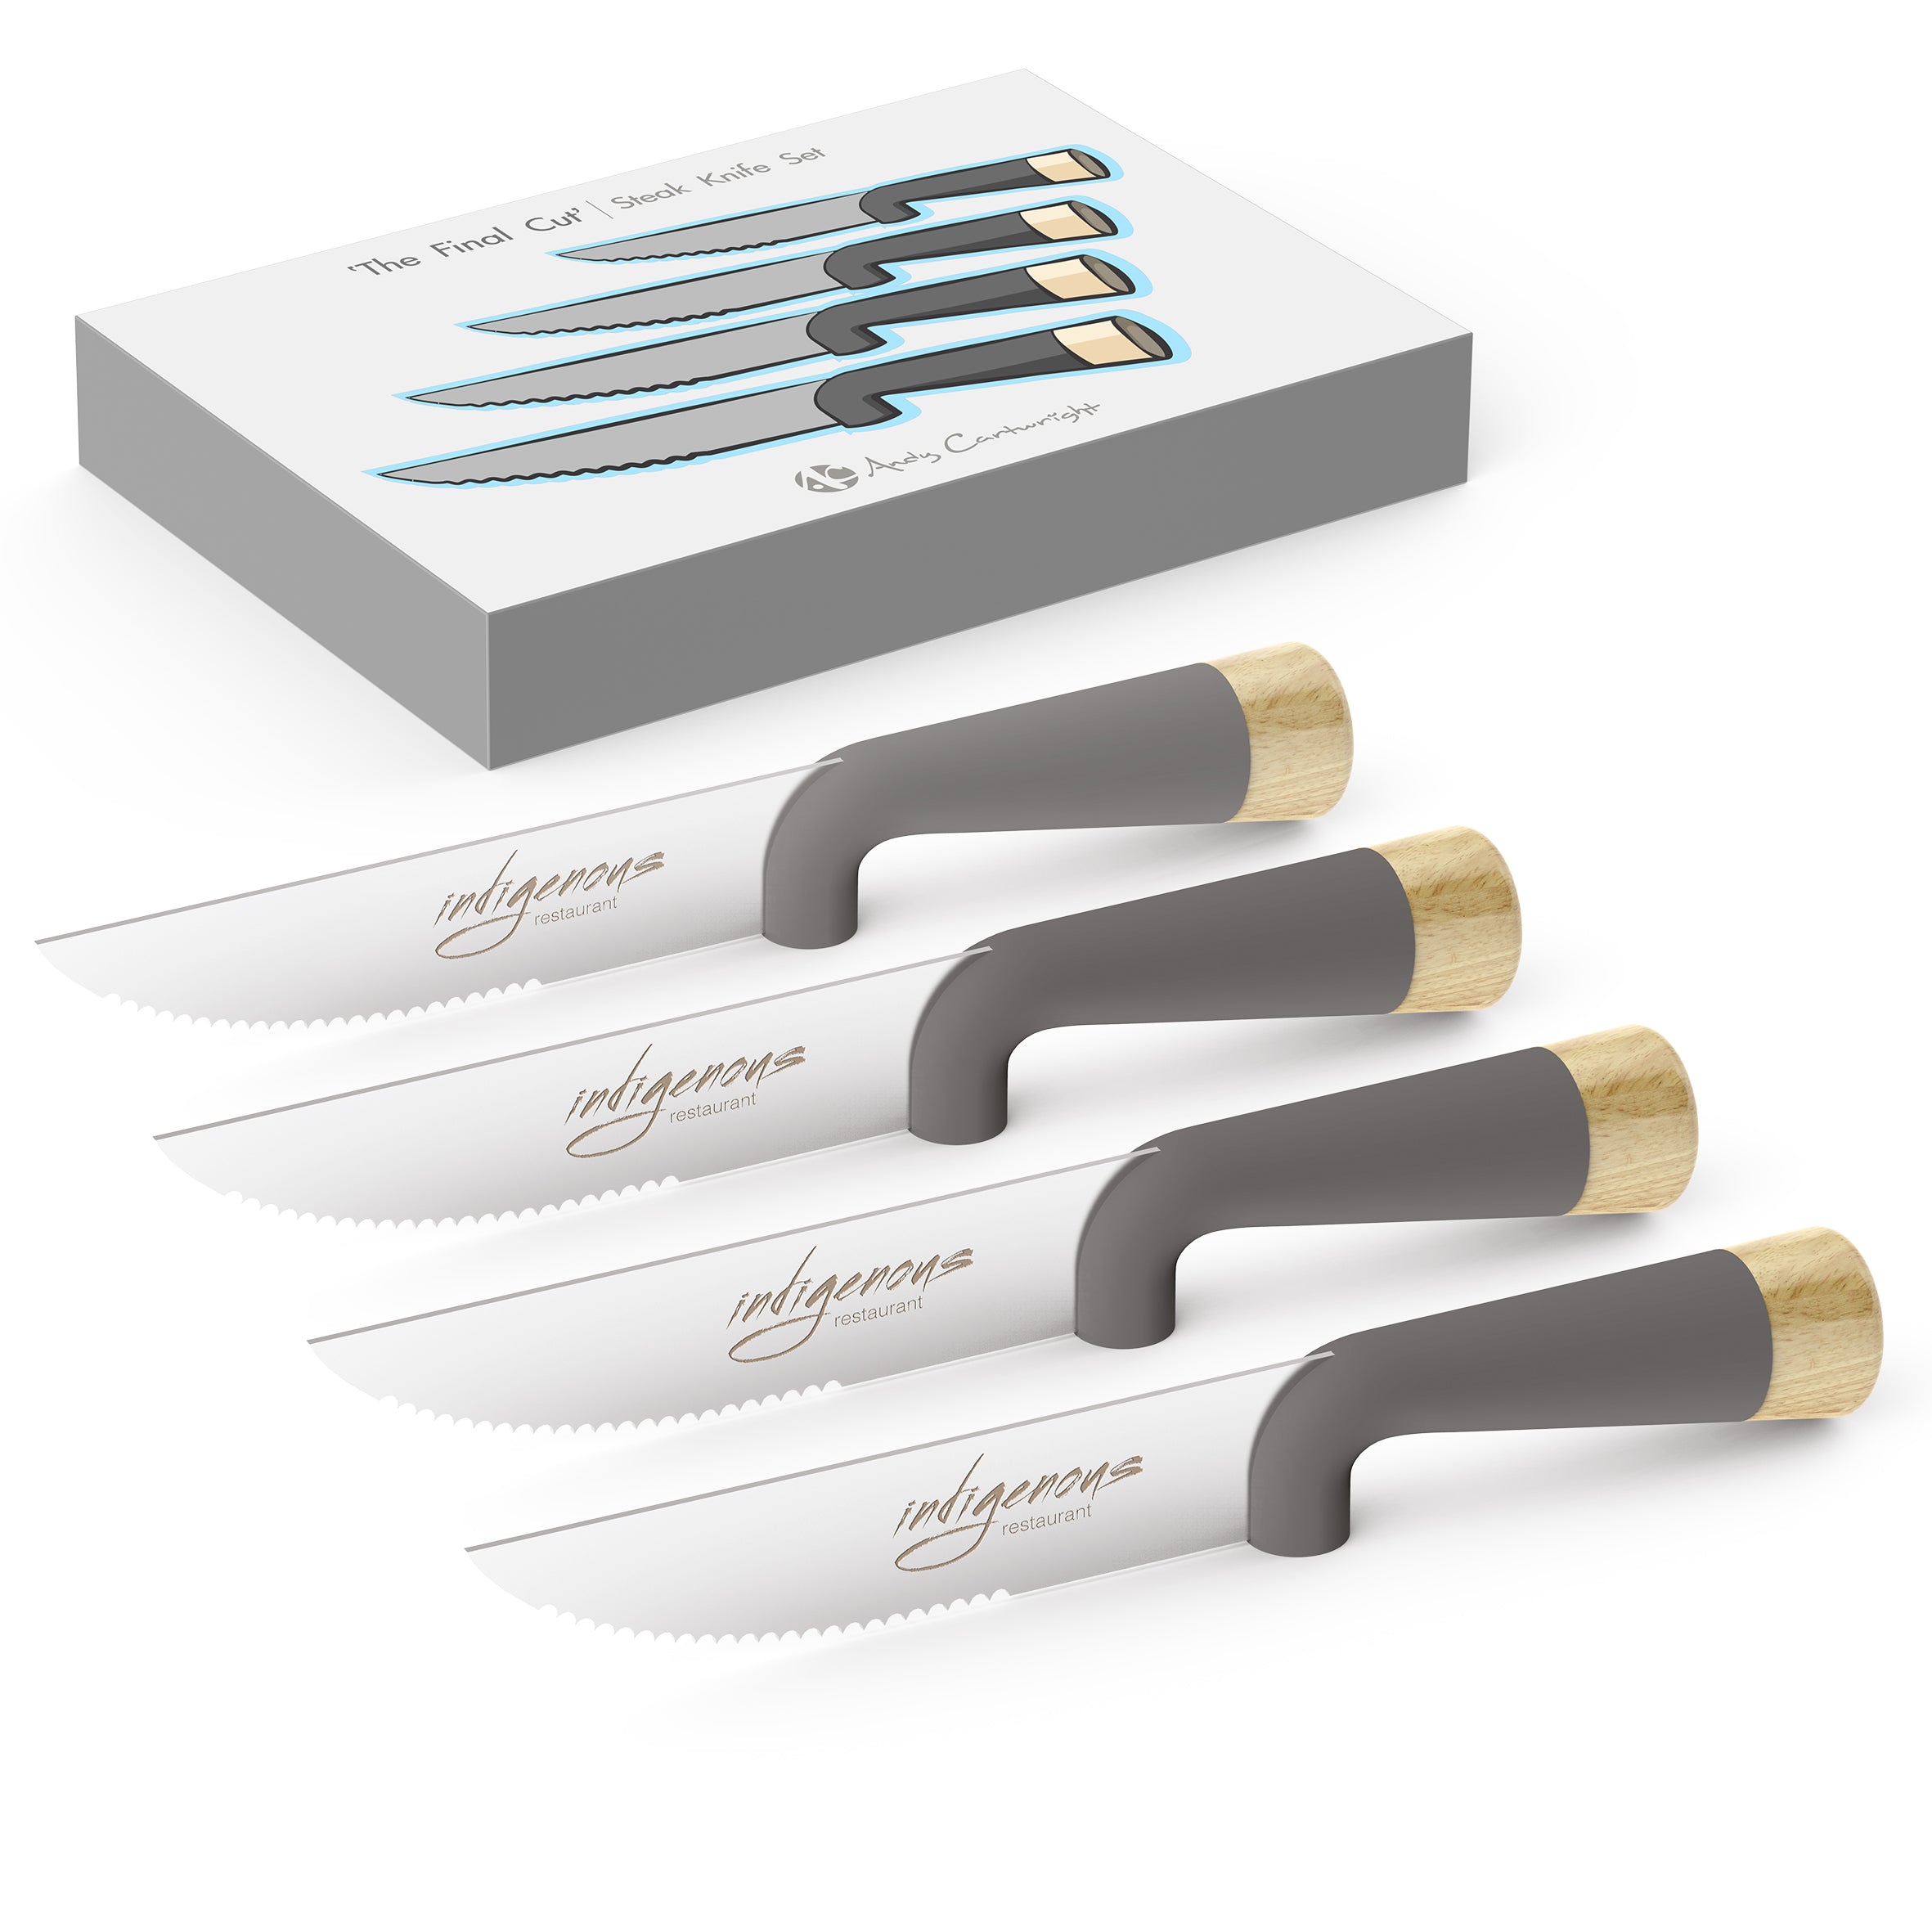 "The Final Cut" Steak Knife Set